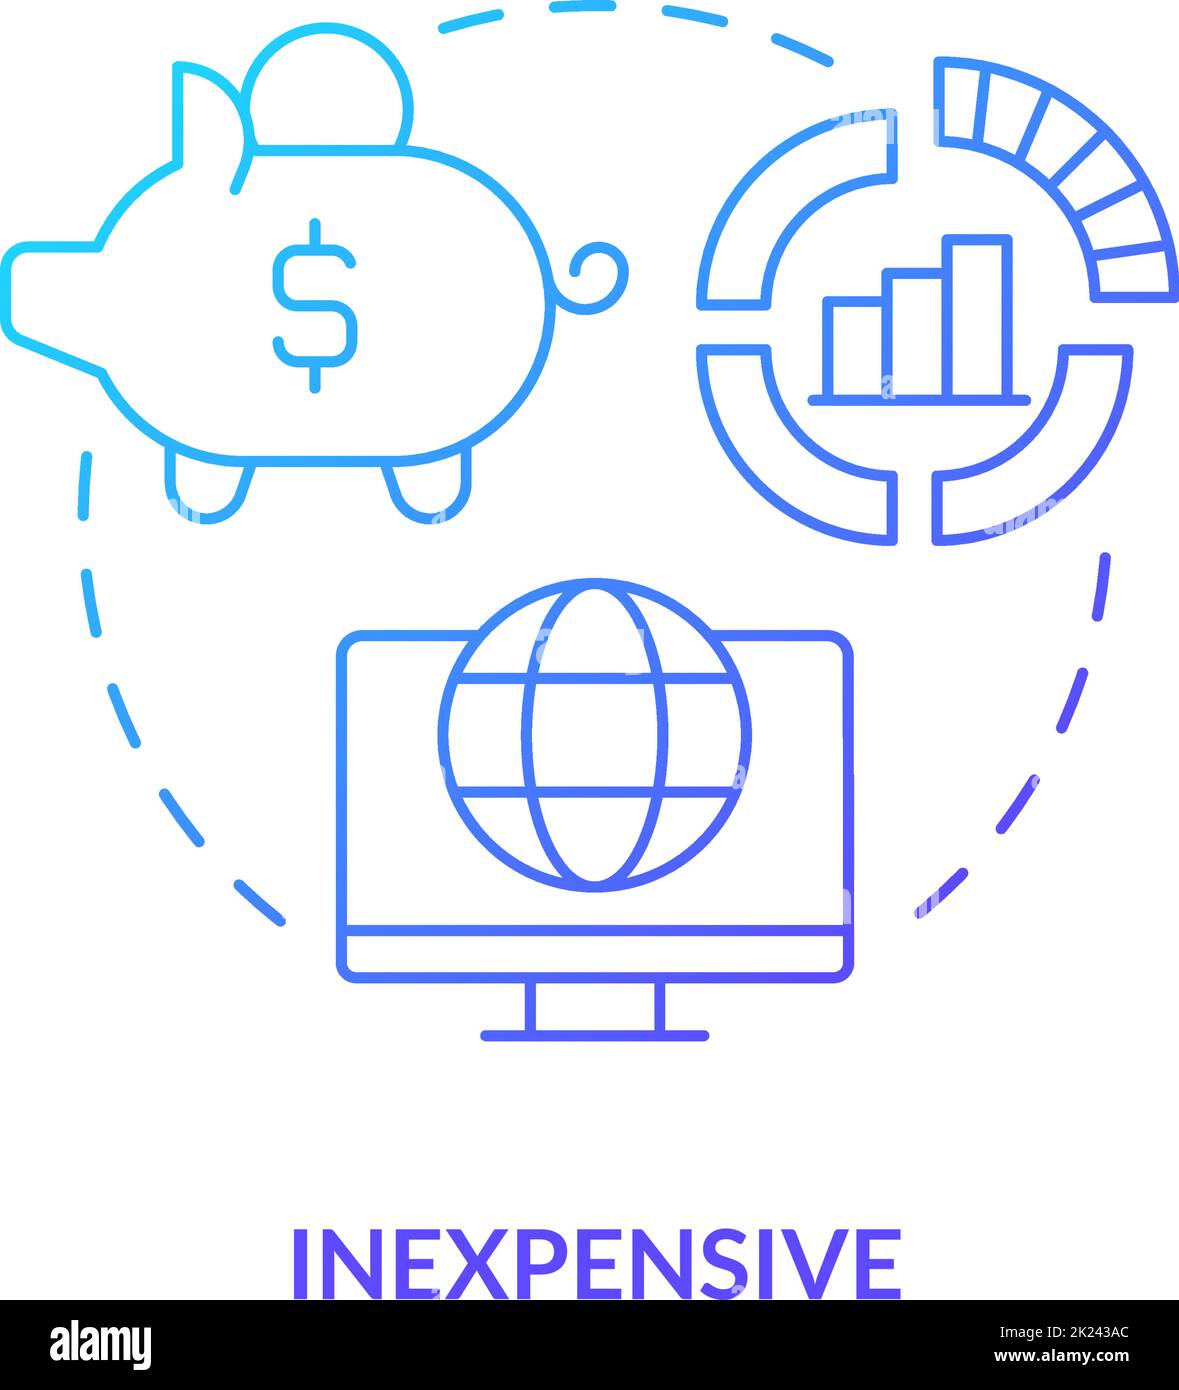 Inexpensive blue gradient concept icon Stock Vector